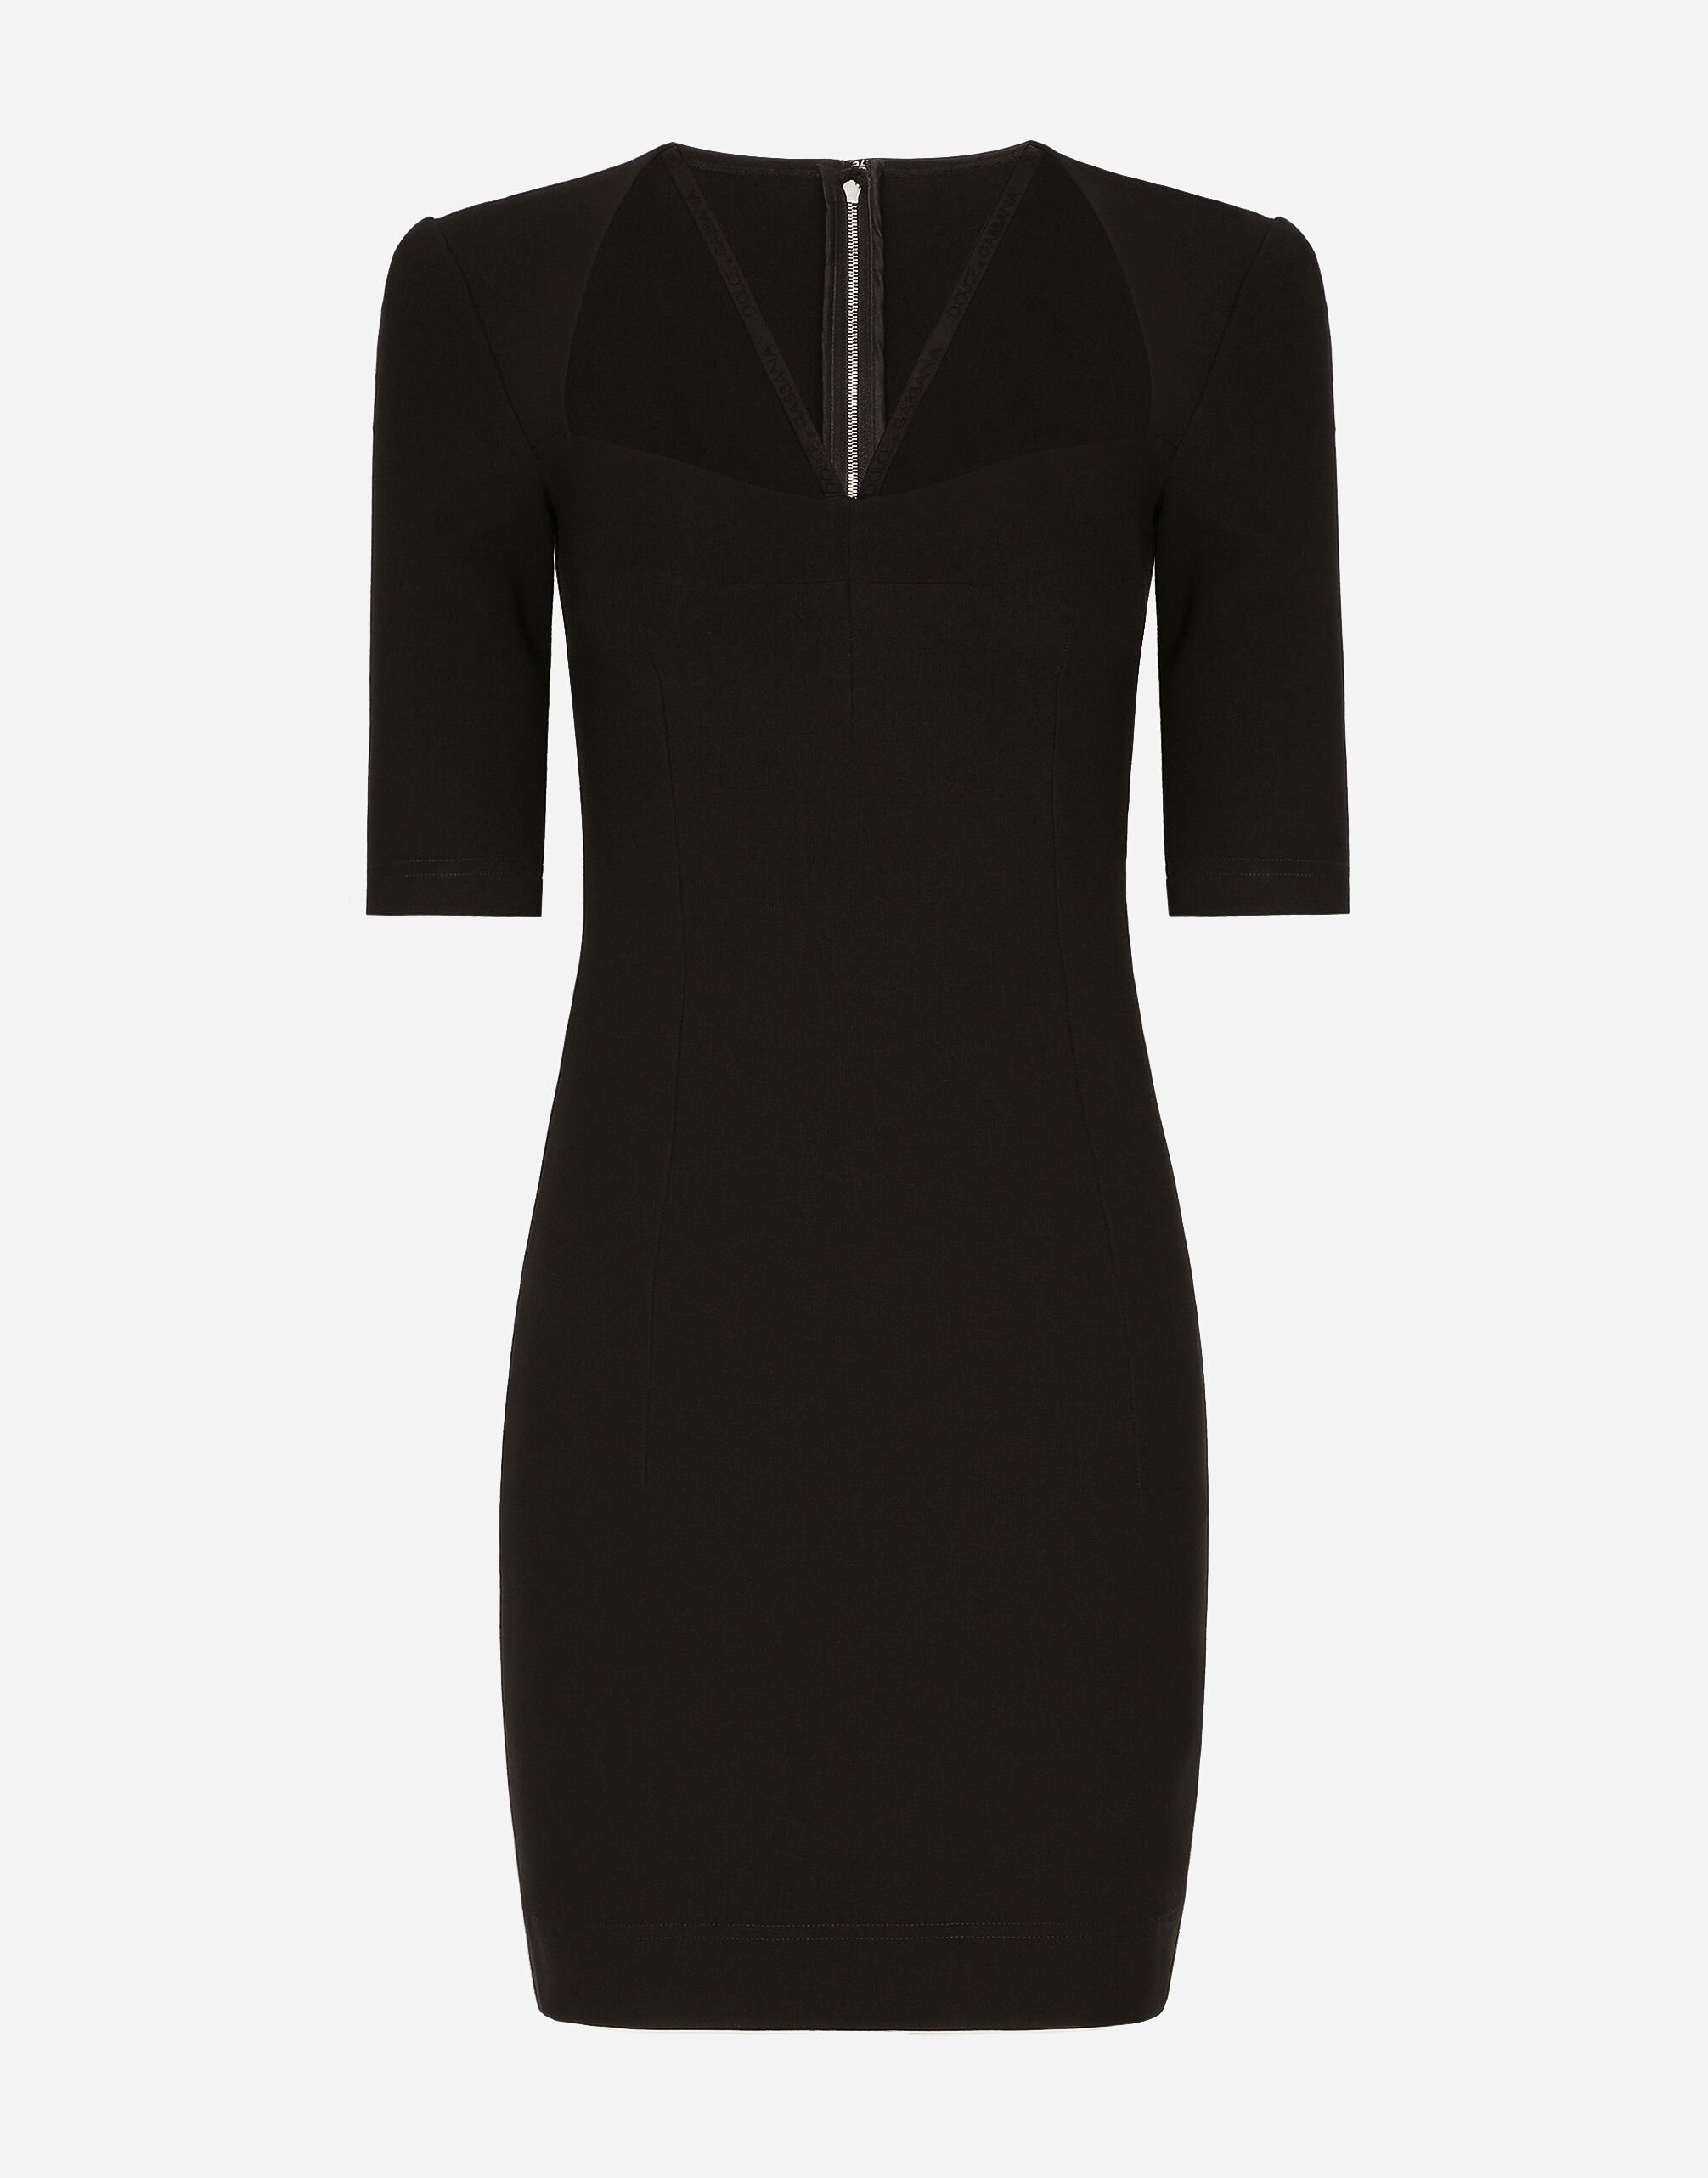 Dolce & Gabbana Short jersey dress with 3/4 sleeves Black VG6186VN187